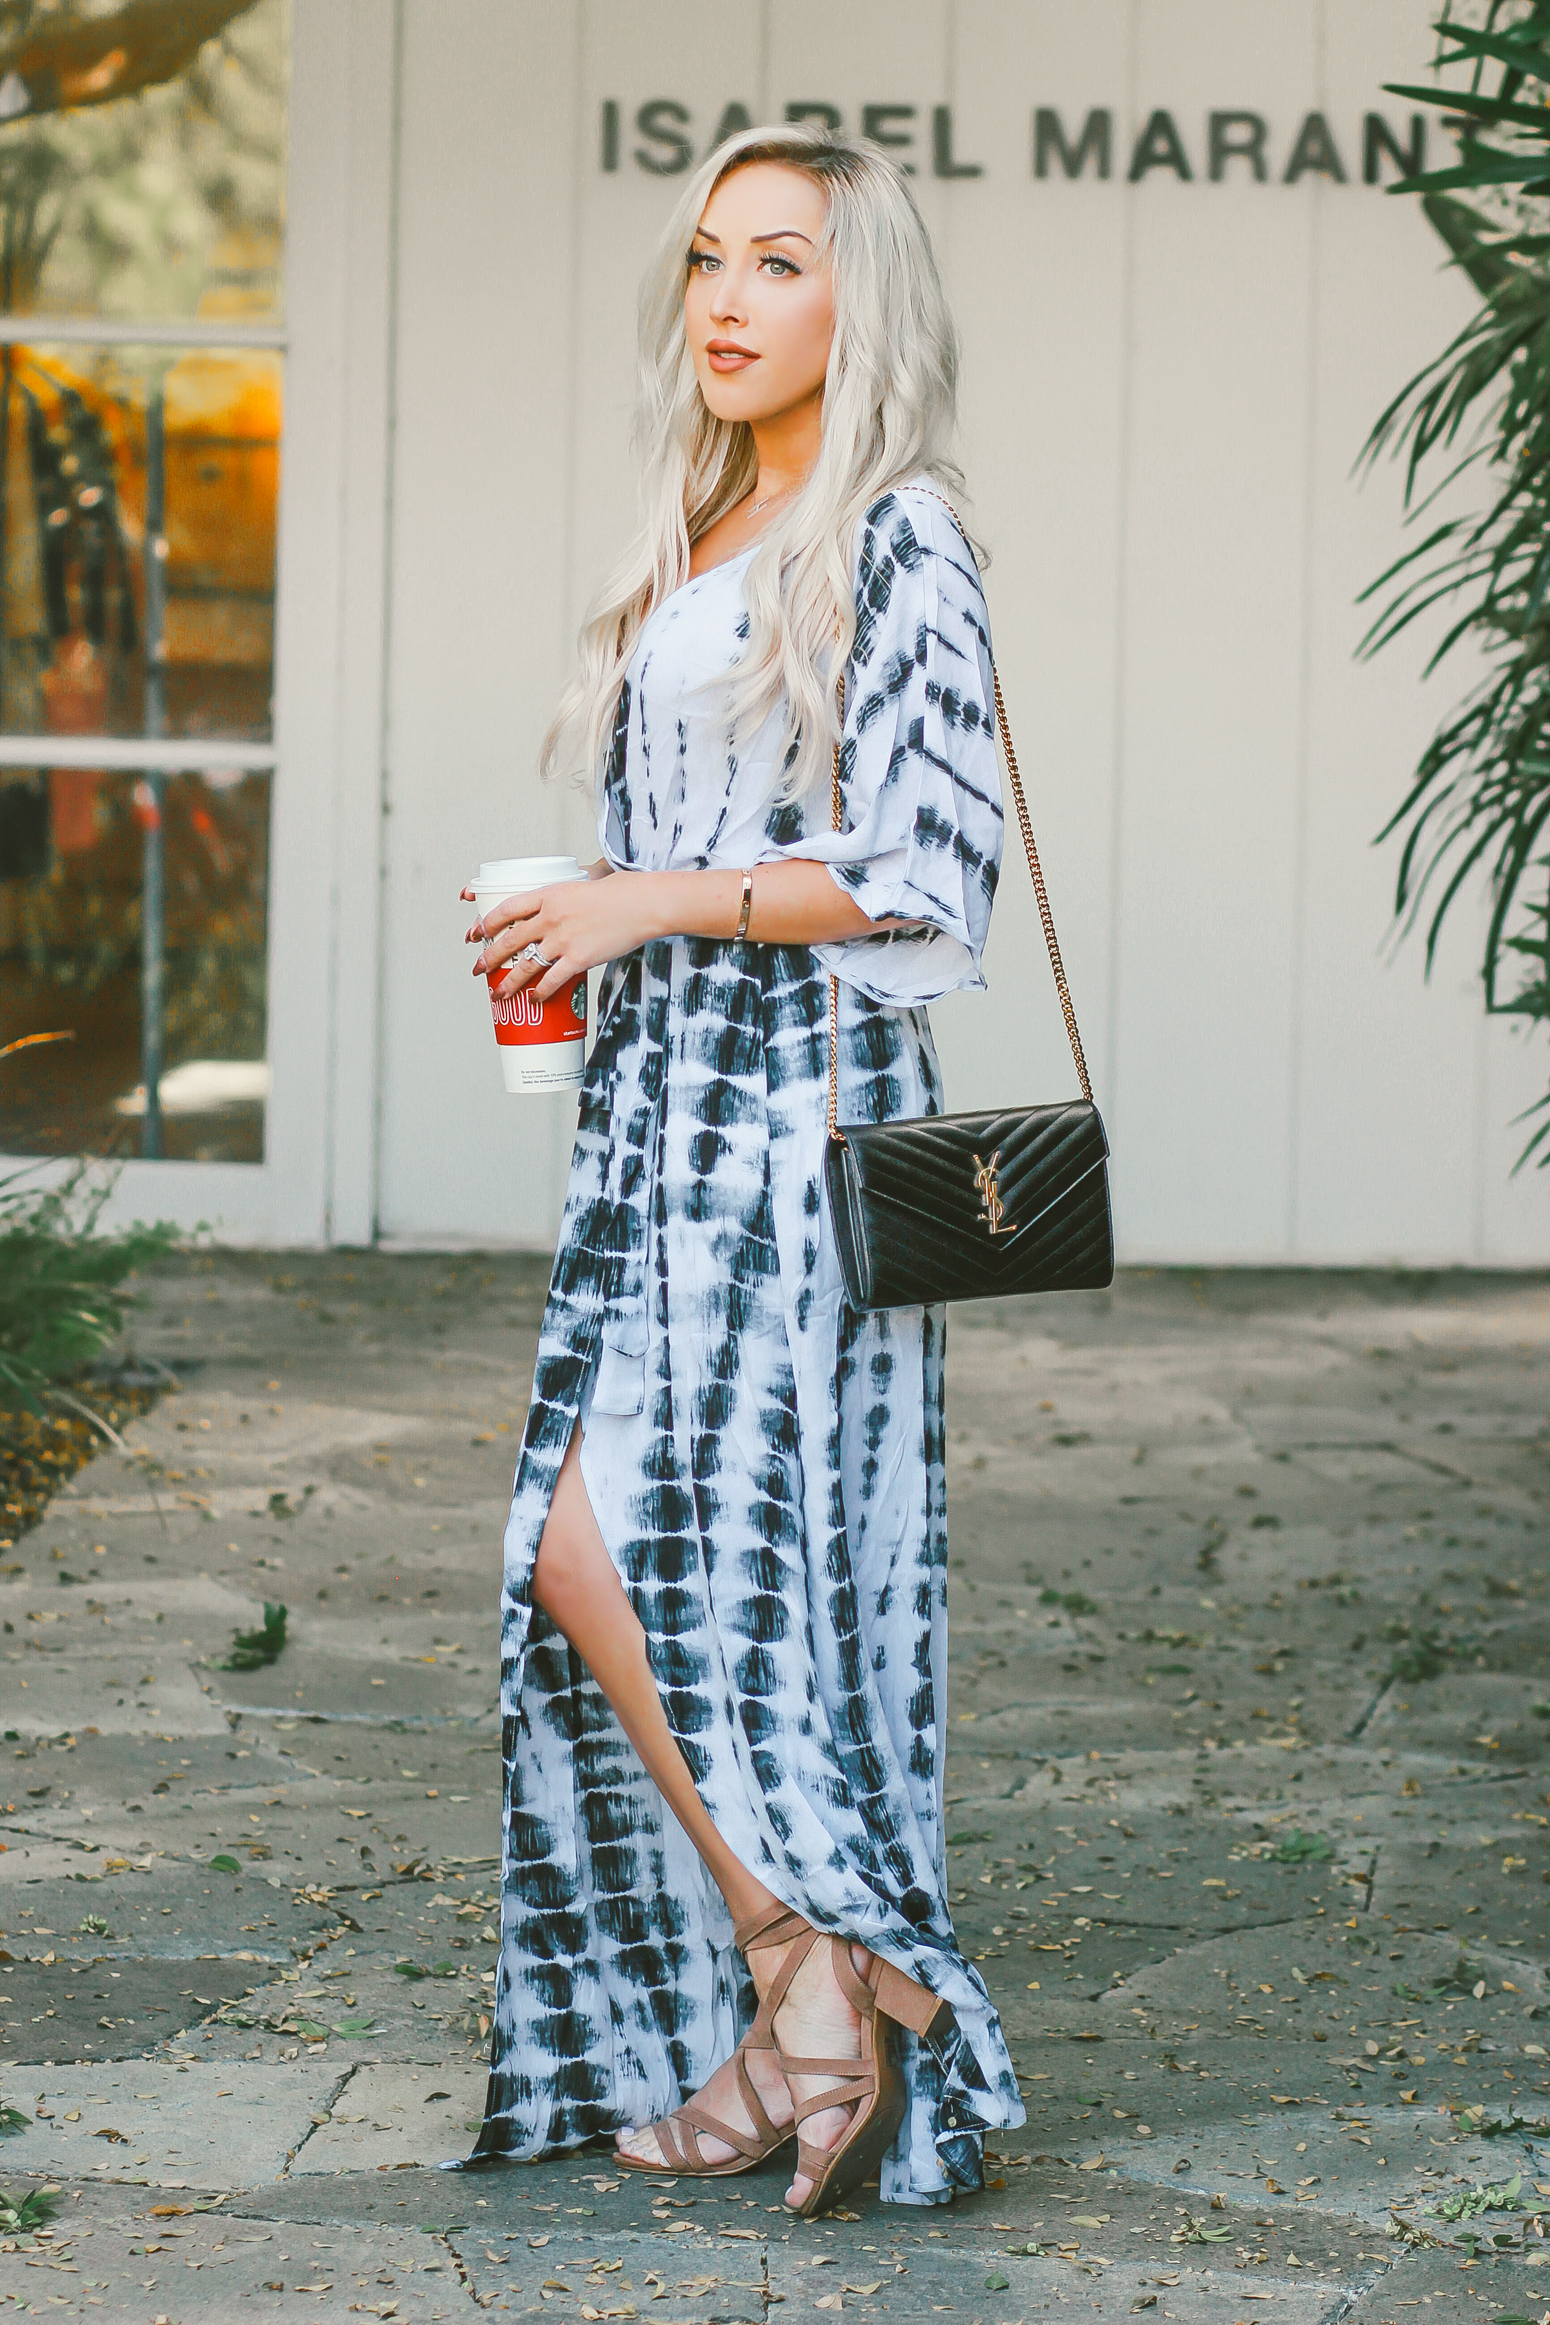 Blondie in the City | Tie Dye Dress from @fashionnova